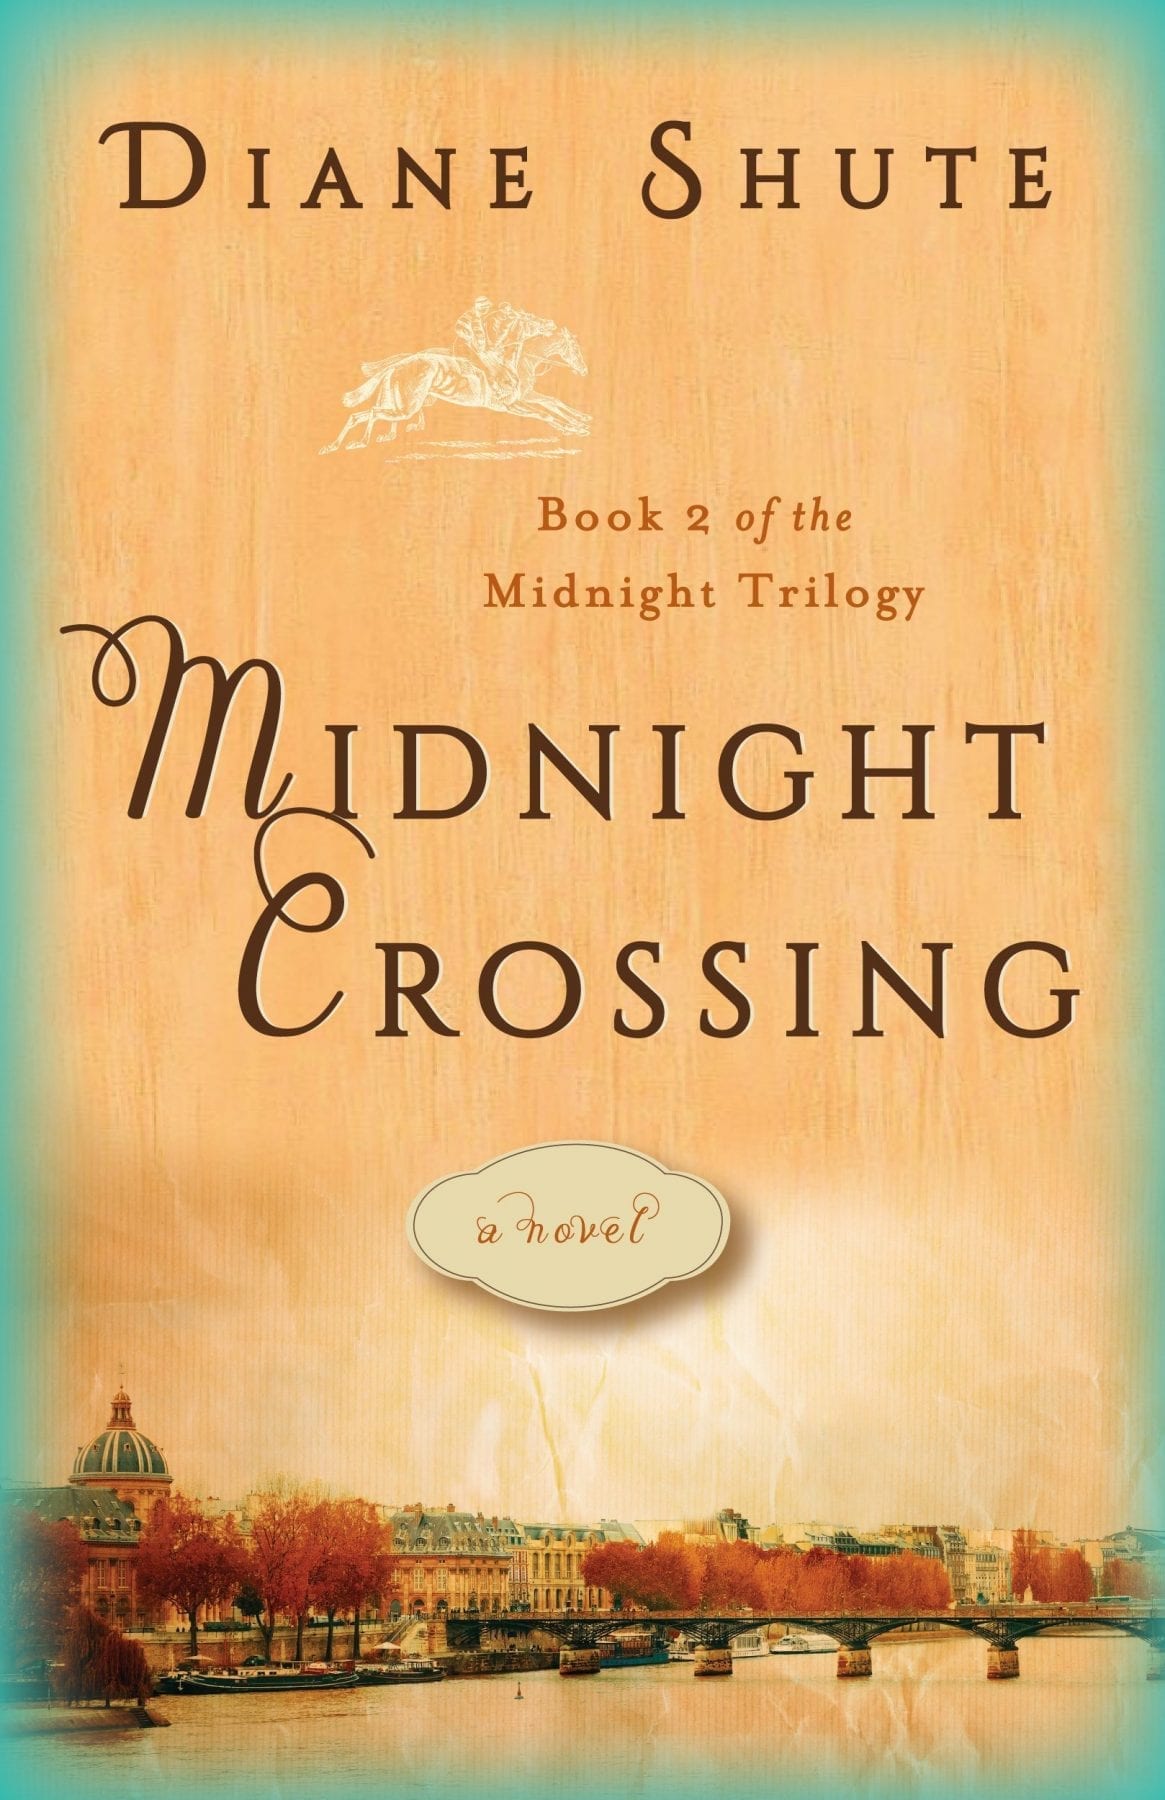 Midnight Crossing by Diane Shute